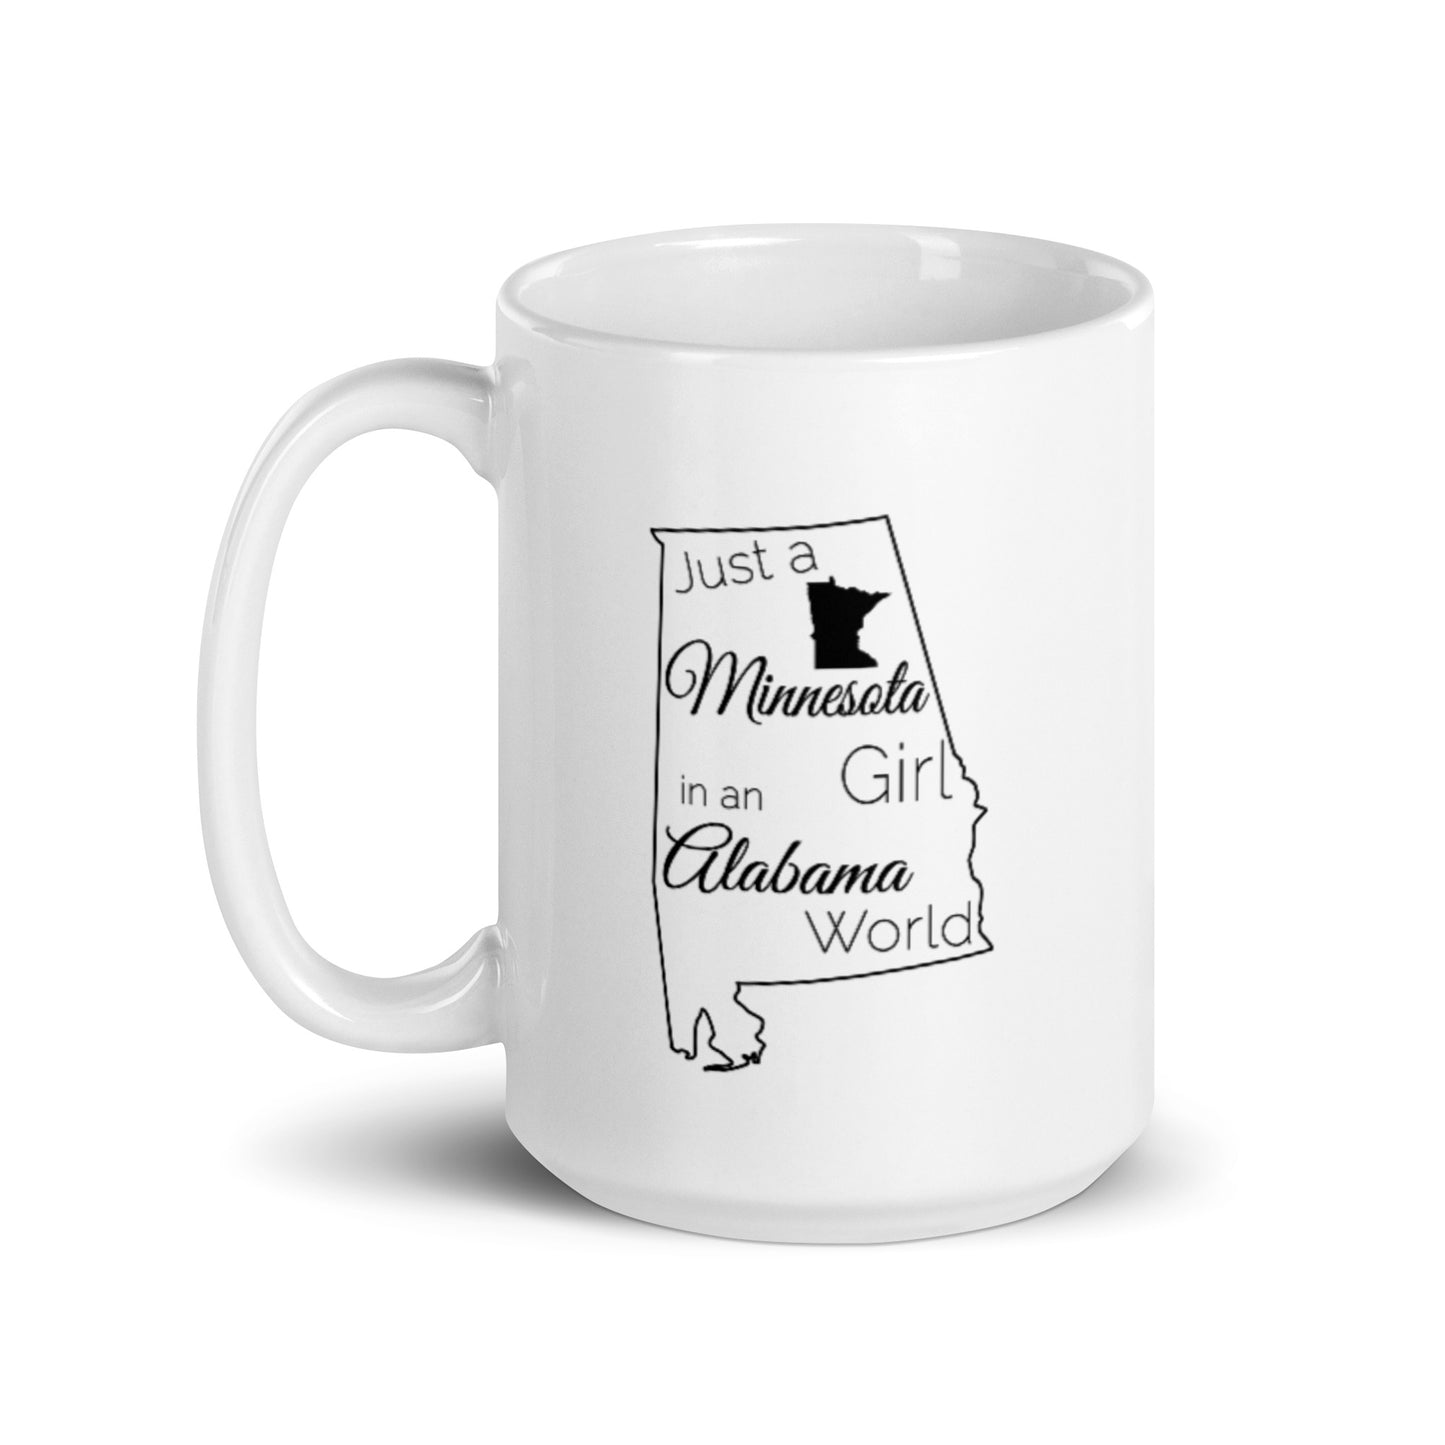 Just a Minnesota Girl in an Alabama World White glossy mug